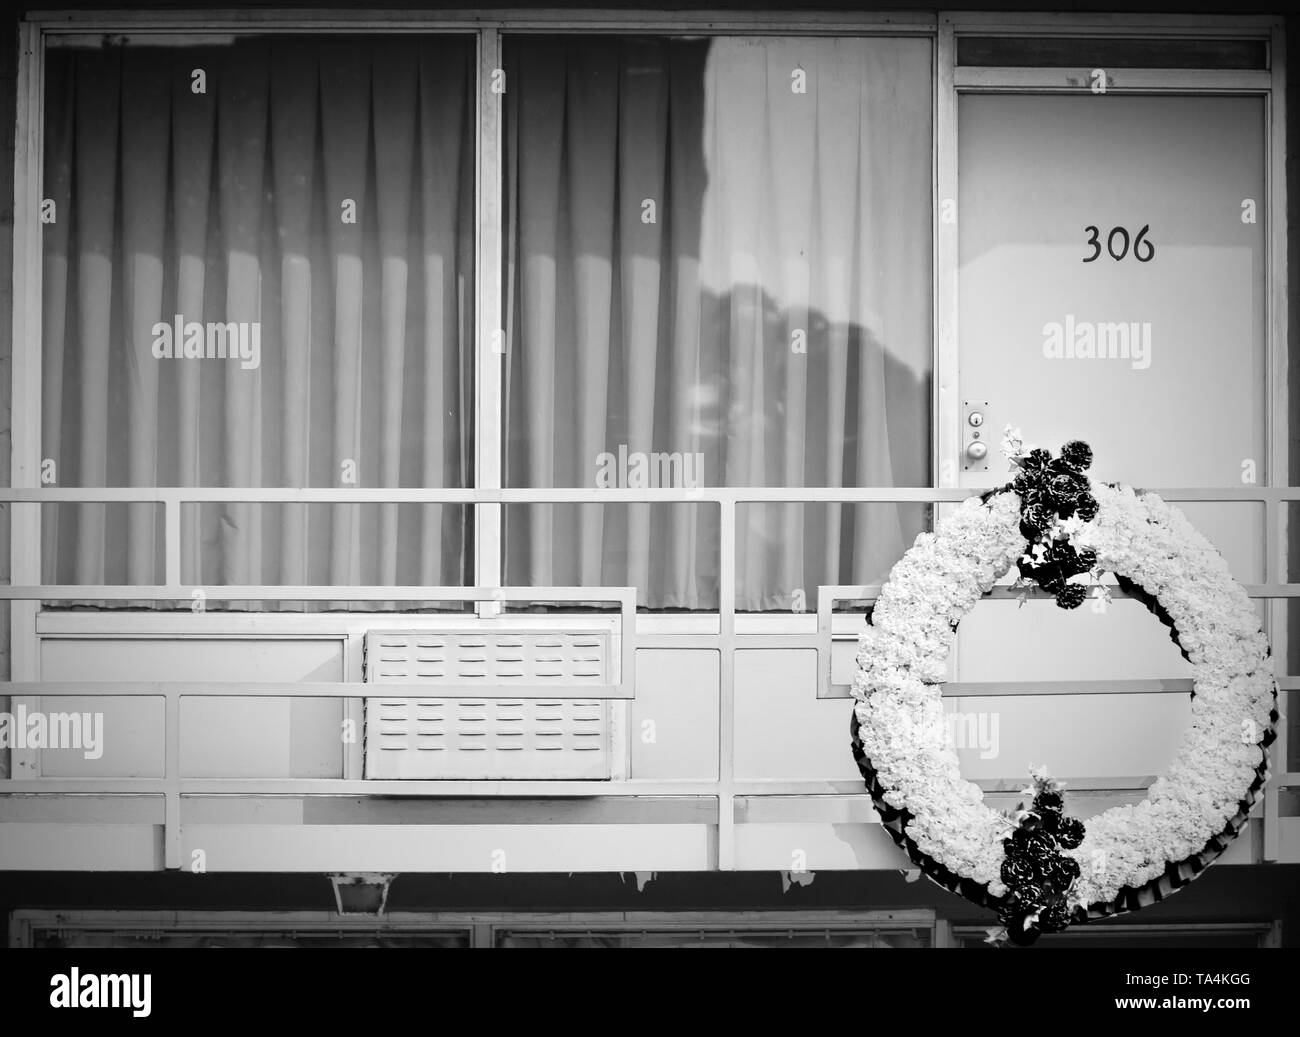 Zimmer 306 an der Lorraine Motel wird dargestellt, Sept. 7, 2015, in Memphis, Tennessee. Civil Rights leader Dr. Martin Luther King Jr. ermordet wurde. Stockfoto